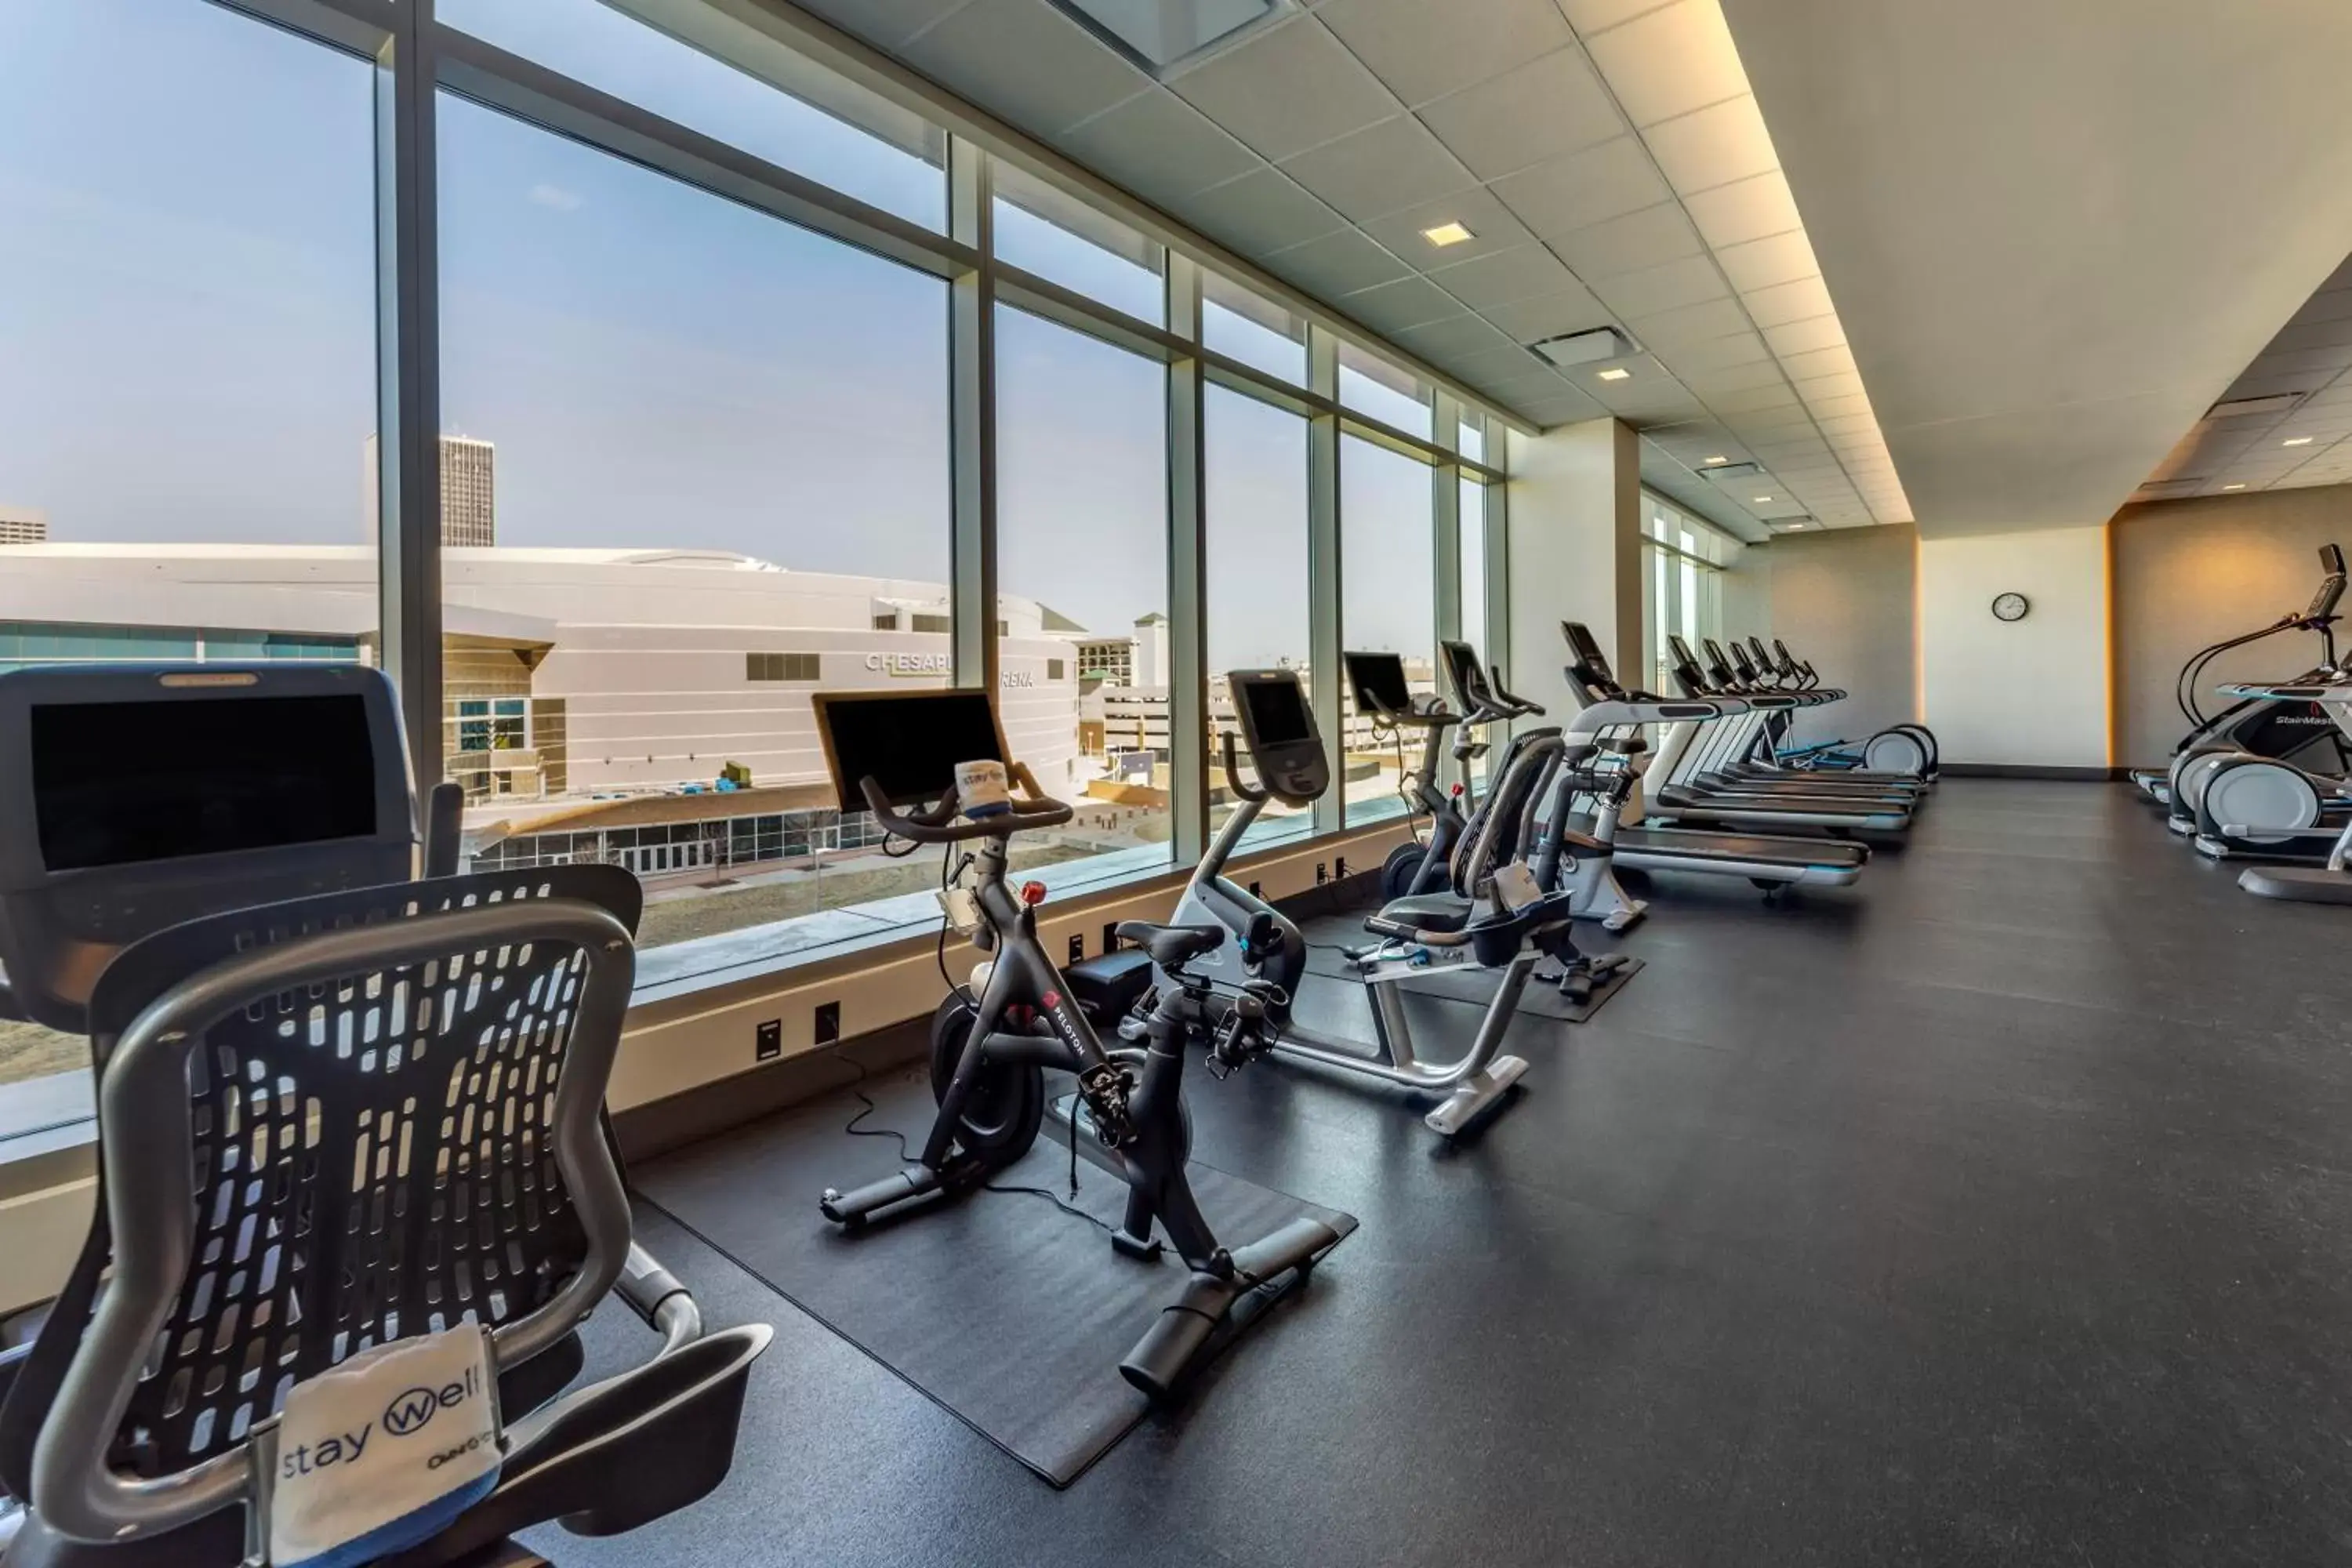 Fitness centre/facilities, Fitness Center/Facilities in Omni Oklahoma City Hotel